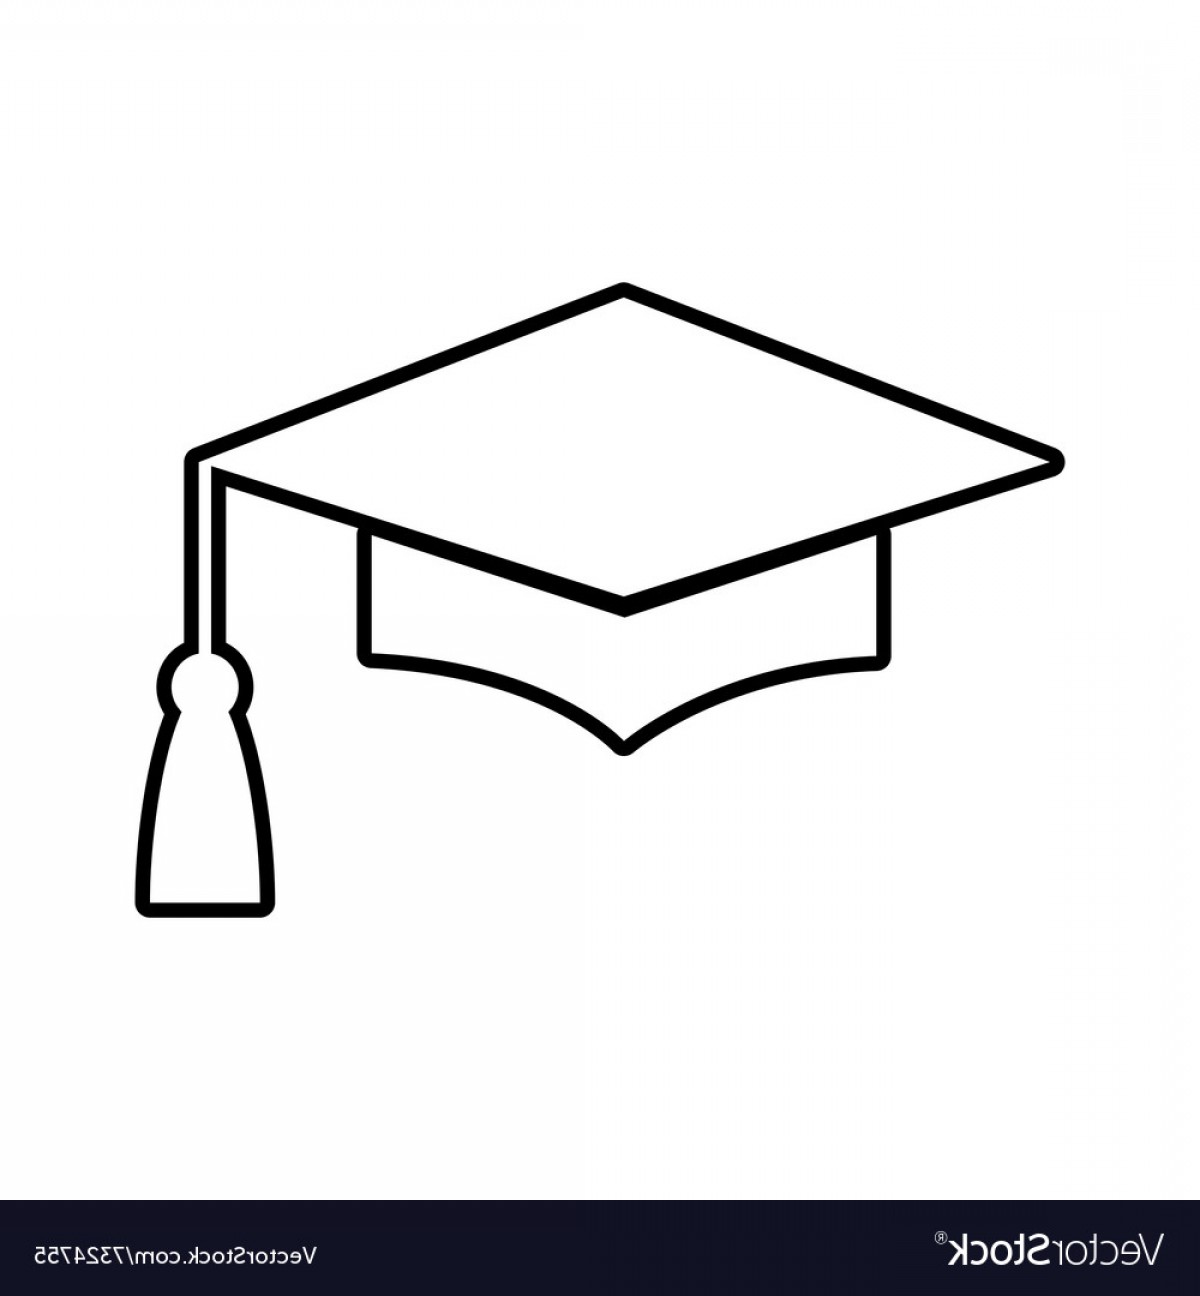 Graduation cap icon line